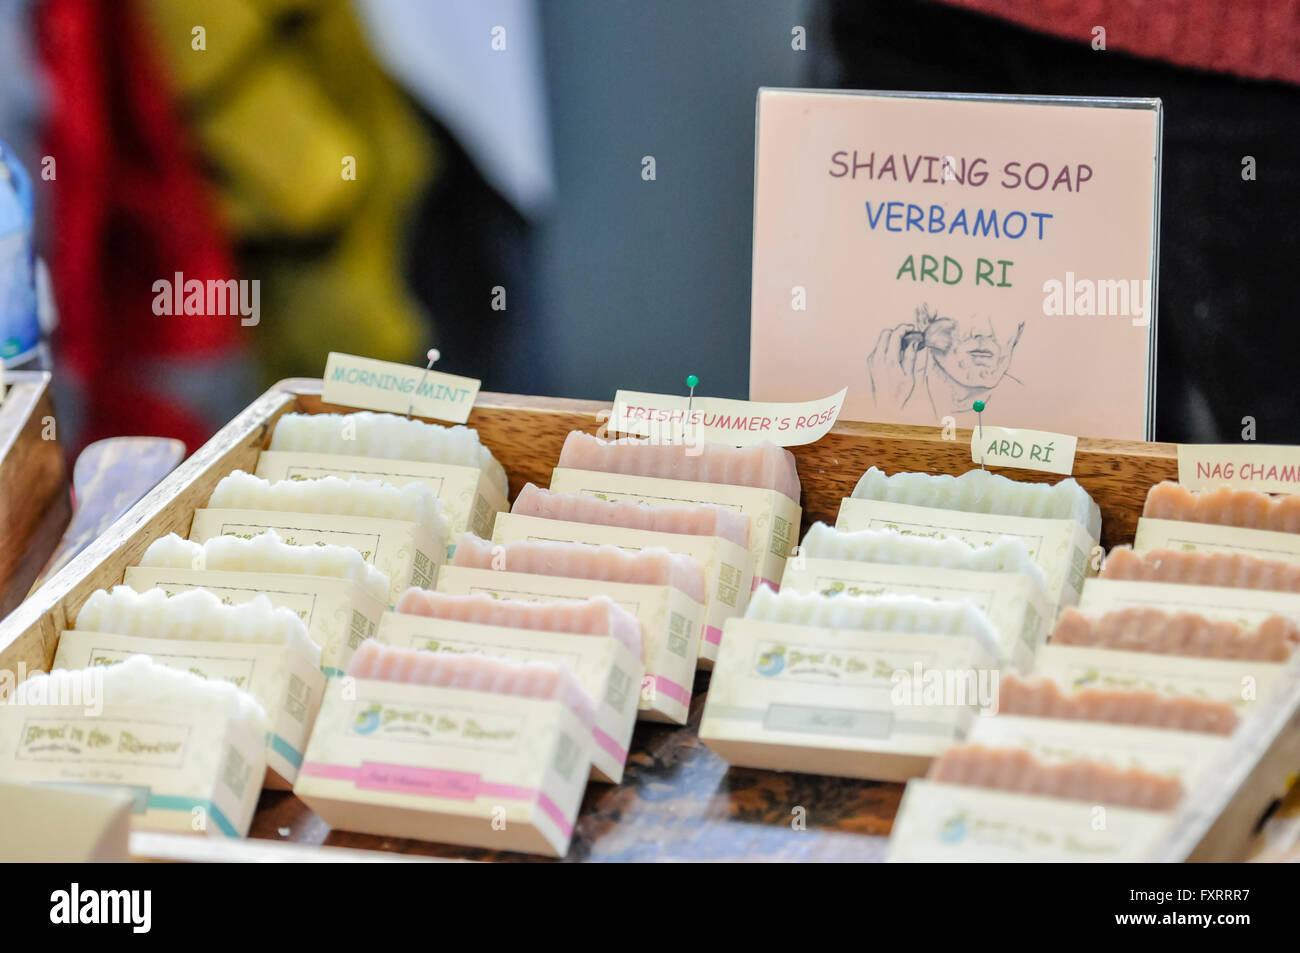 Handmade shaving soap bars on sale at a market stall. Stock Photo